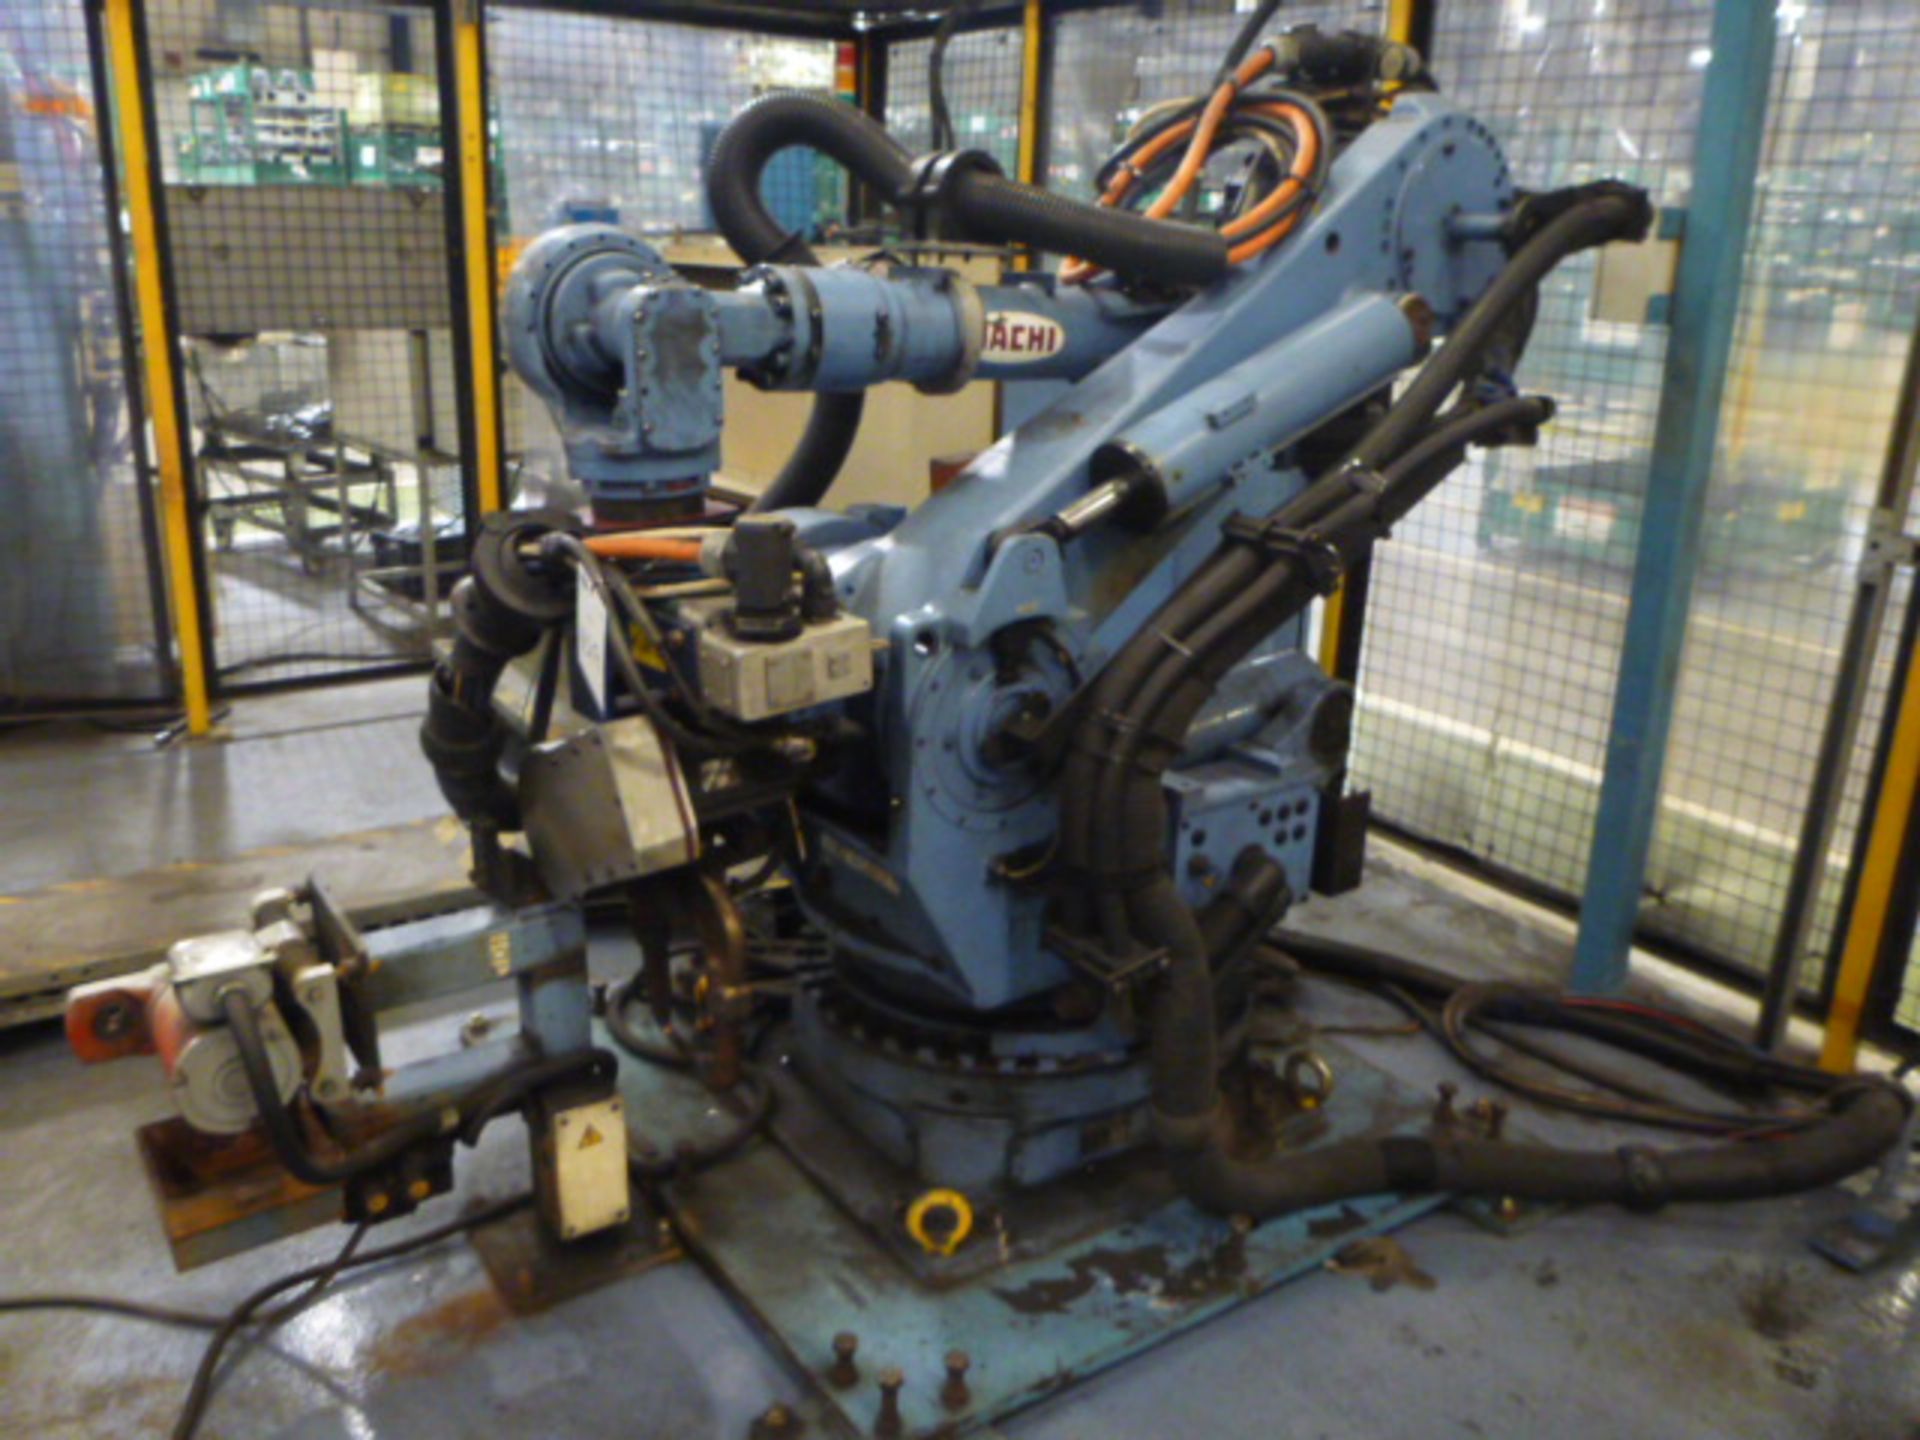 Nachi SF130F-01 Robotic Spot Welding Machine (1997) (Cell AM07)